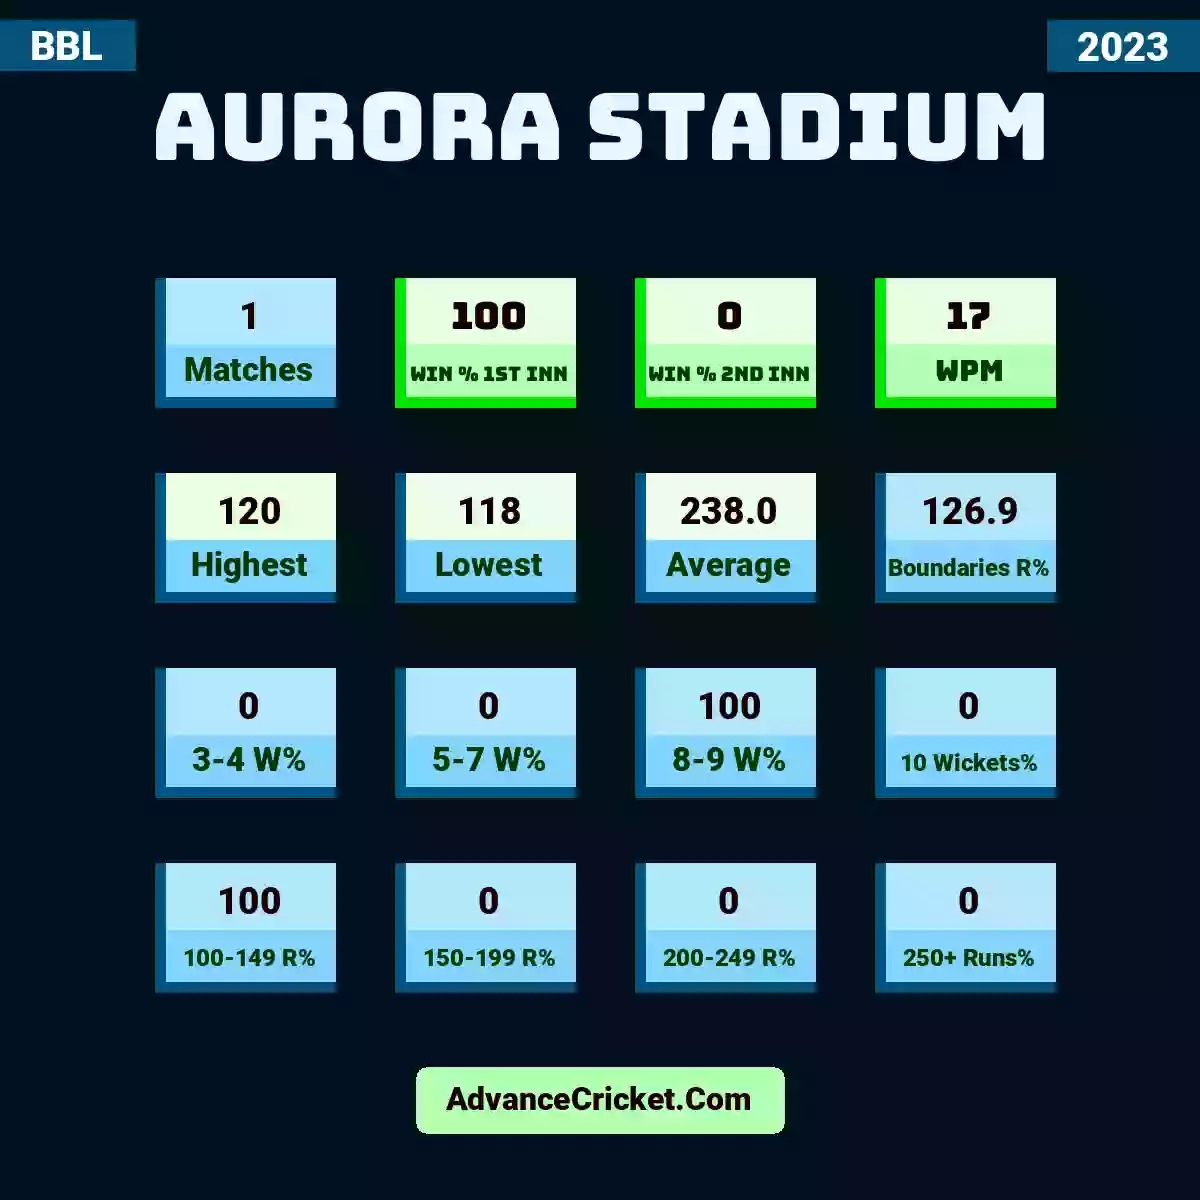 Image showing Aurora Stadium with Matches: 1, Win % 1st Inn: 100, Win % 2nd Inn: 0, WPM: 17, Highest: 120, Lowest: 118, Average: 238.0, Boundaries R%: 126.9, 3-4 W%: 0, 5-7 W%: 0, 8-9 W%: 100, 10 Wickets%: 0, 100-149 R%: 100, 150-199 R%: 0, 200-249 R%: 0, 250+ Runs%: 0.